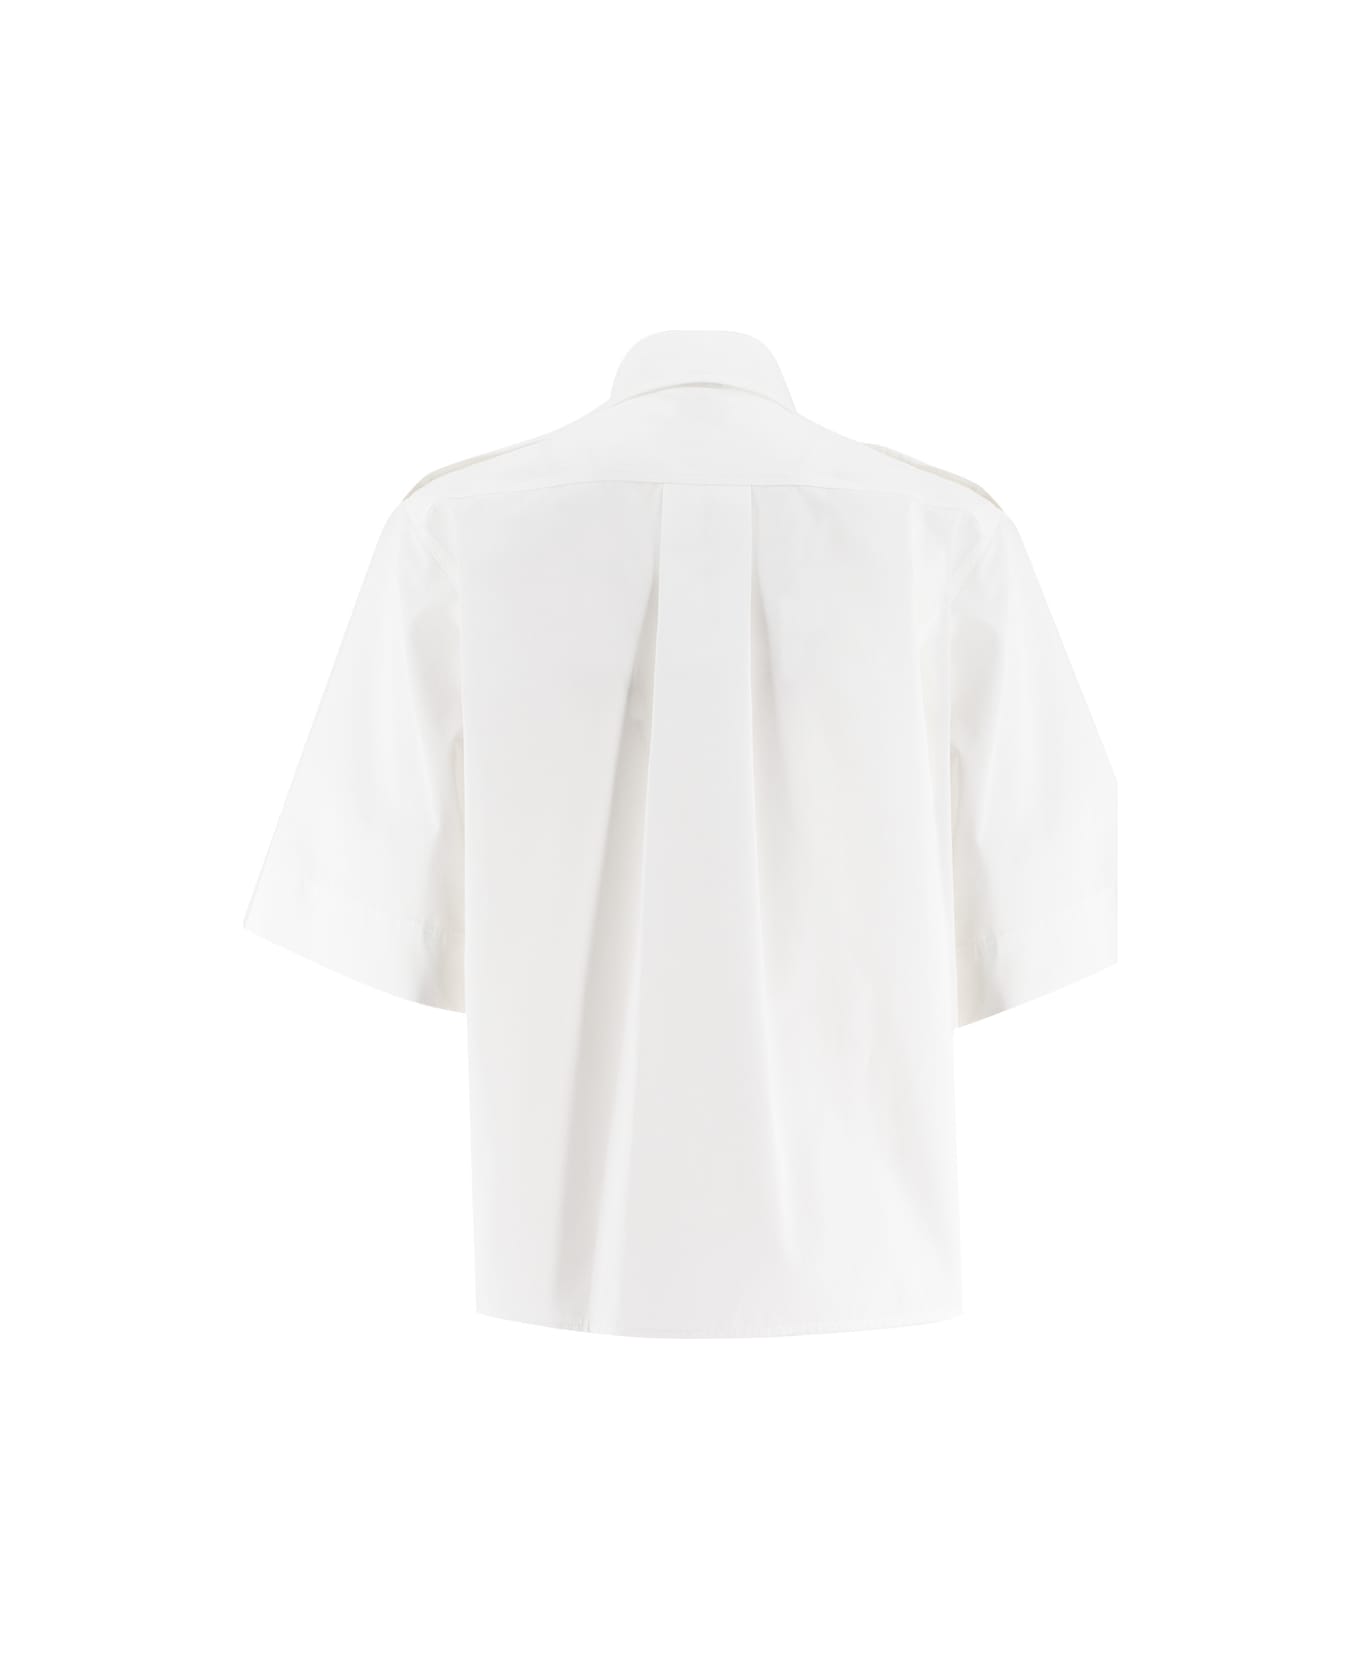 Aspesi Cotton Shirt - BIANCO/WHITE ブラウス